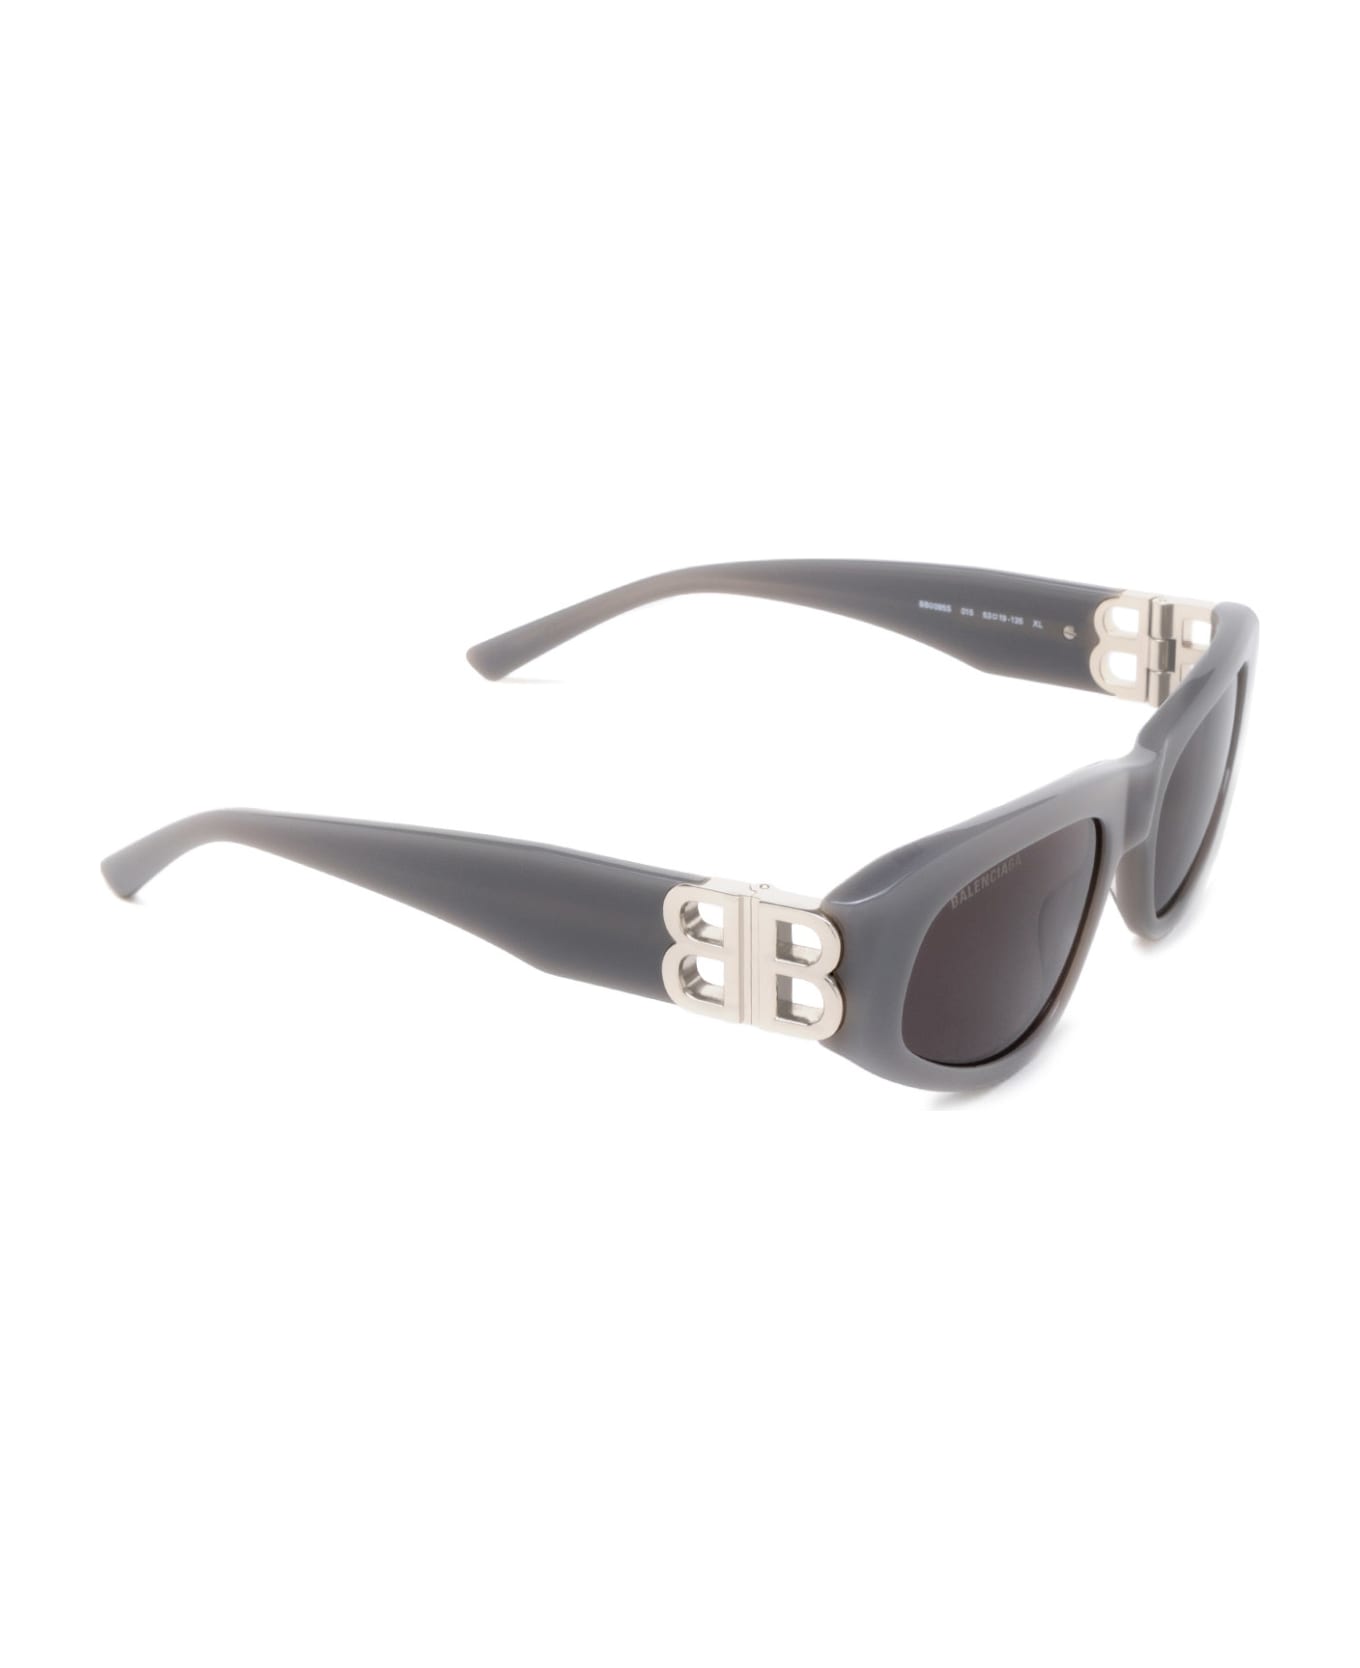 Balenciaga Eyewear Bb0095s Sunglasses - 015 GREY SILVER GREY